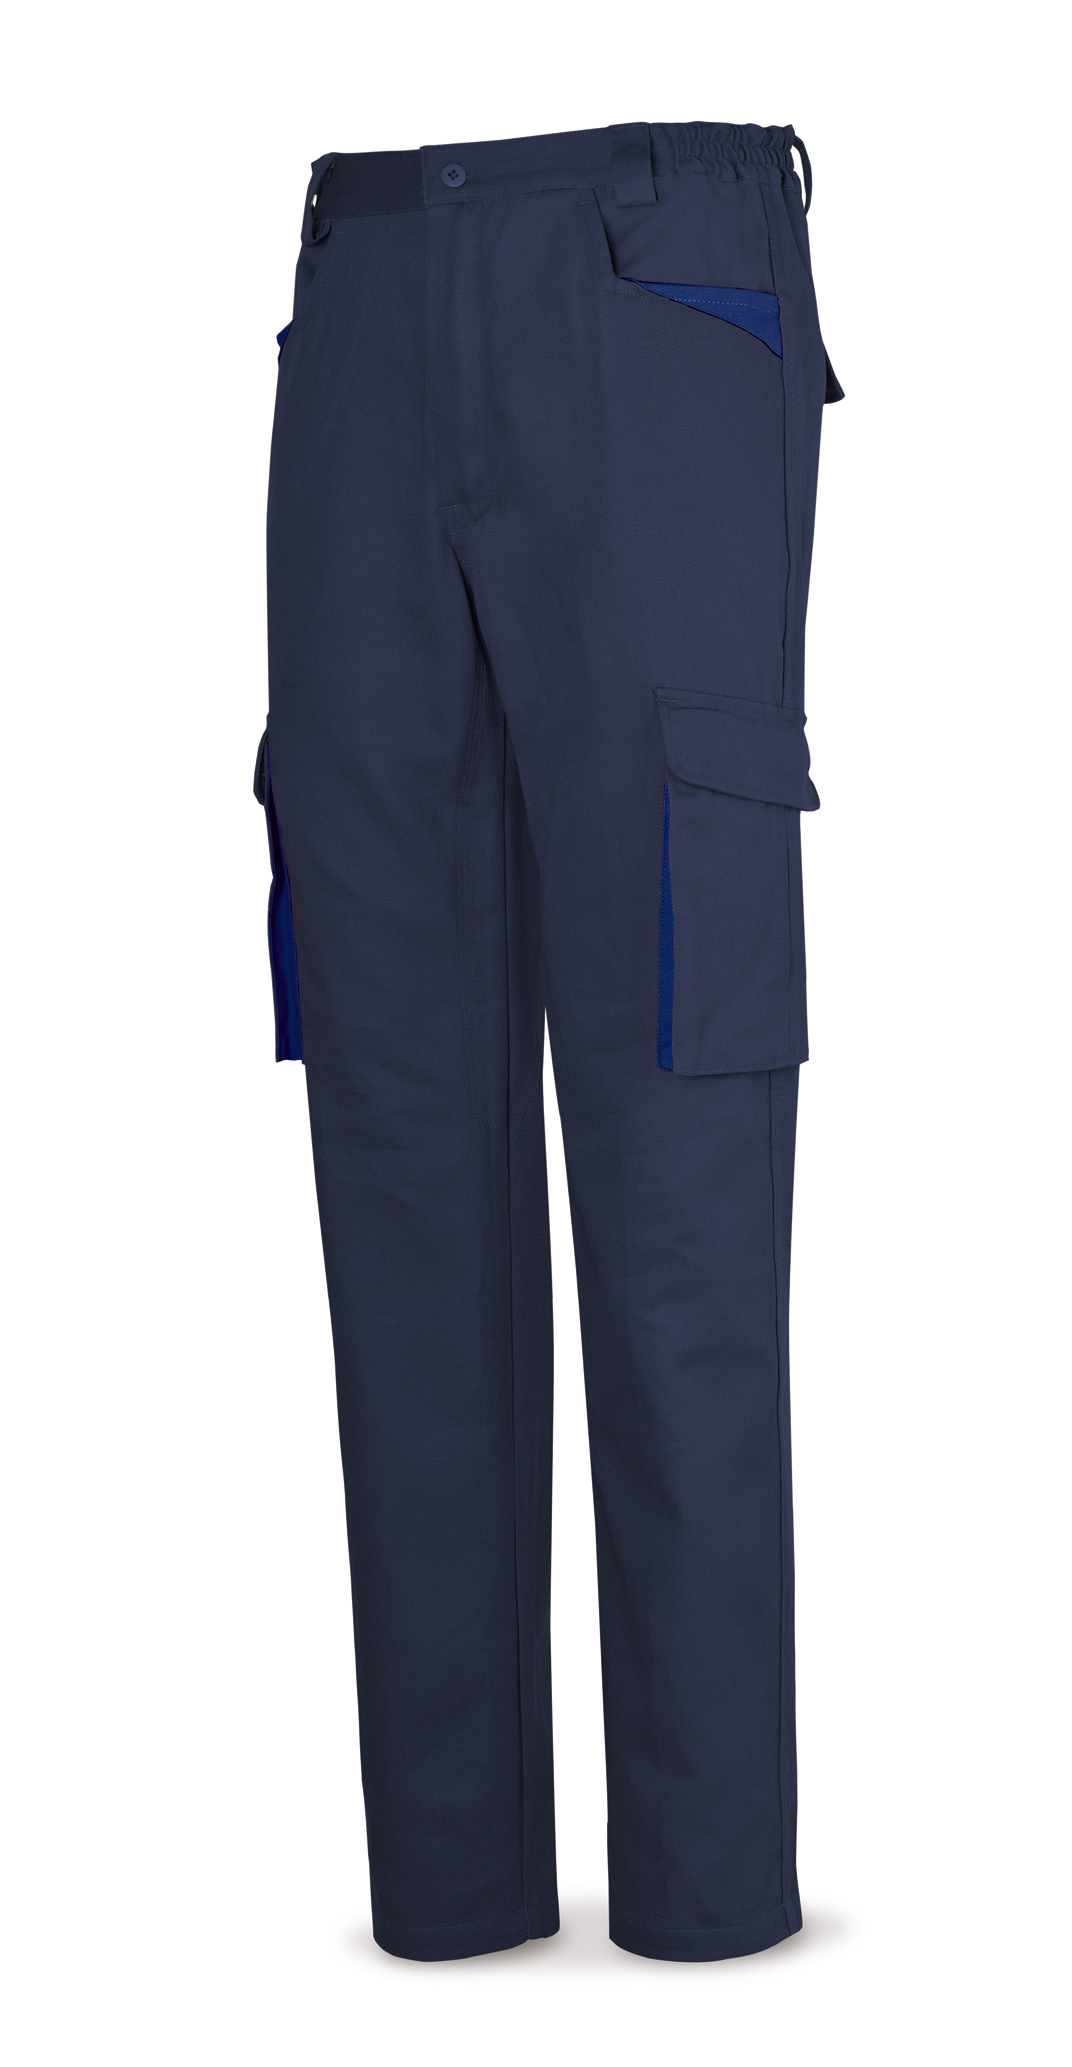 Pantalon algodÓn supertop azul marino 38